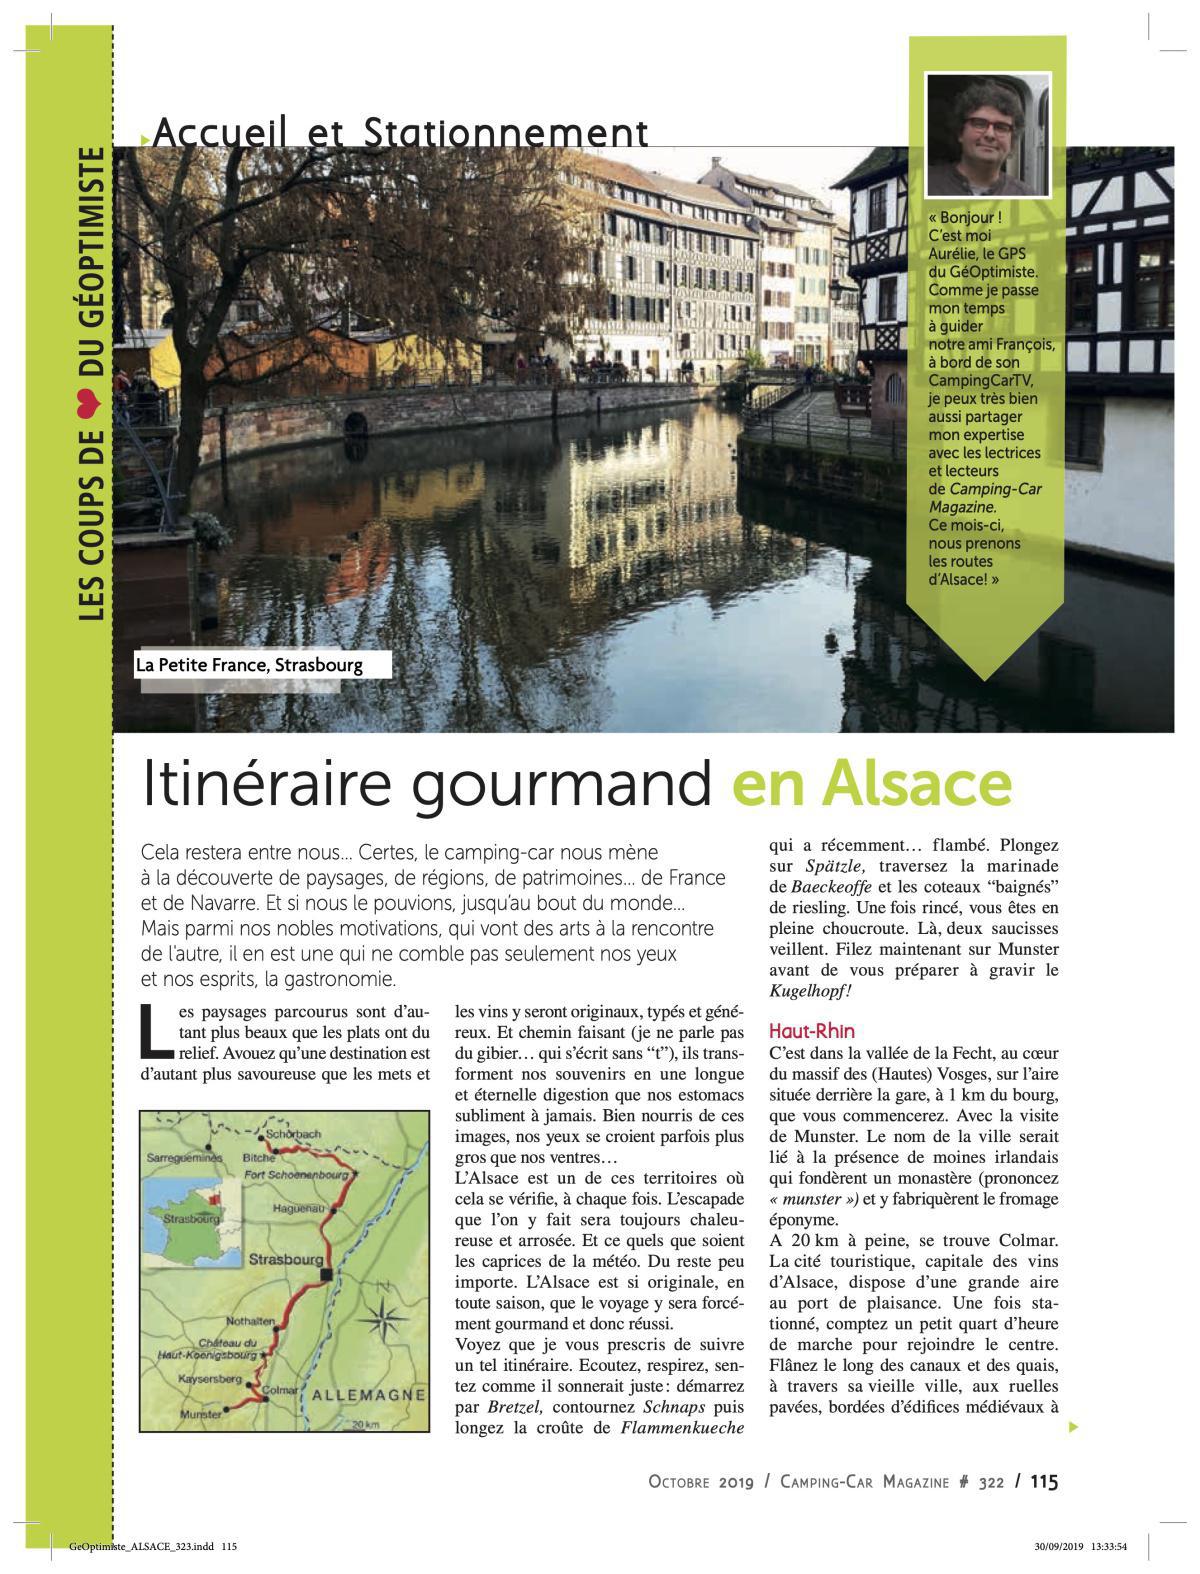 L'Alsace gourmande - CCM 323